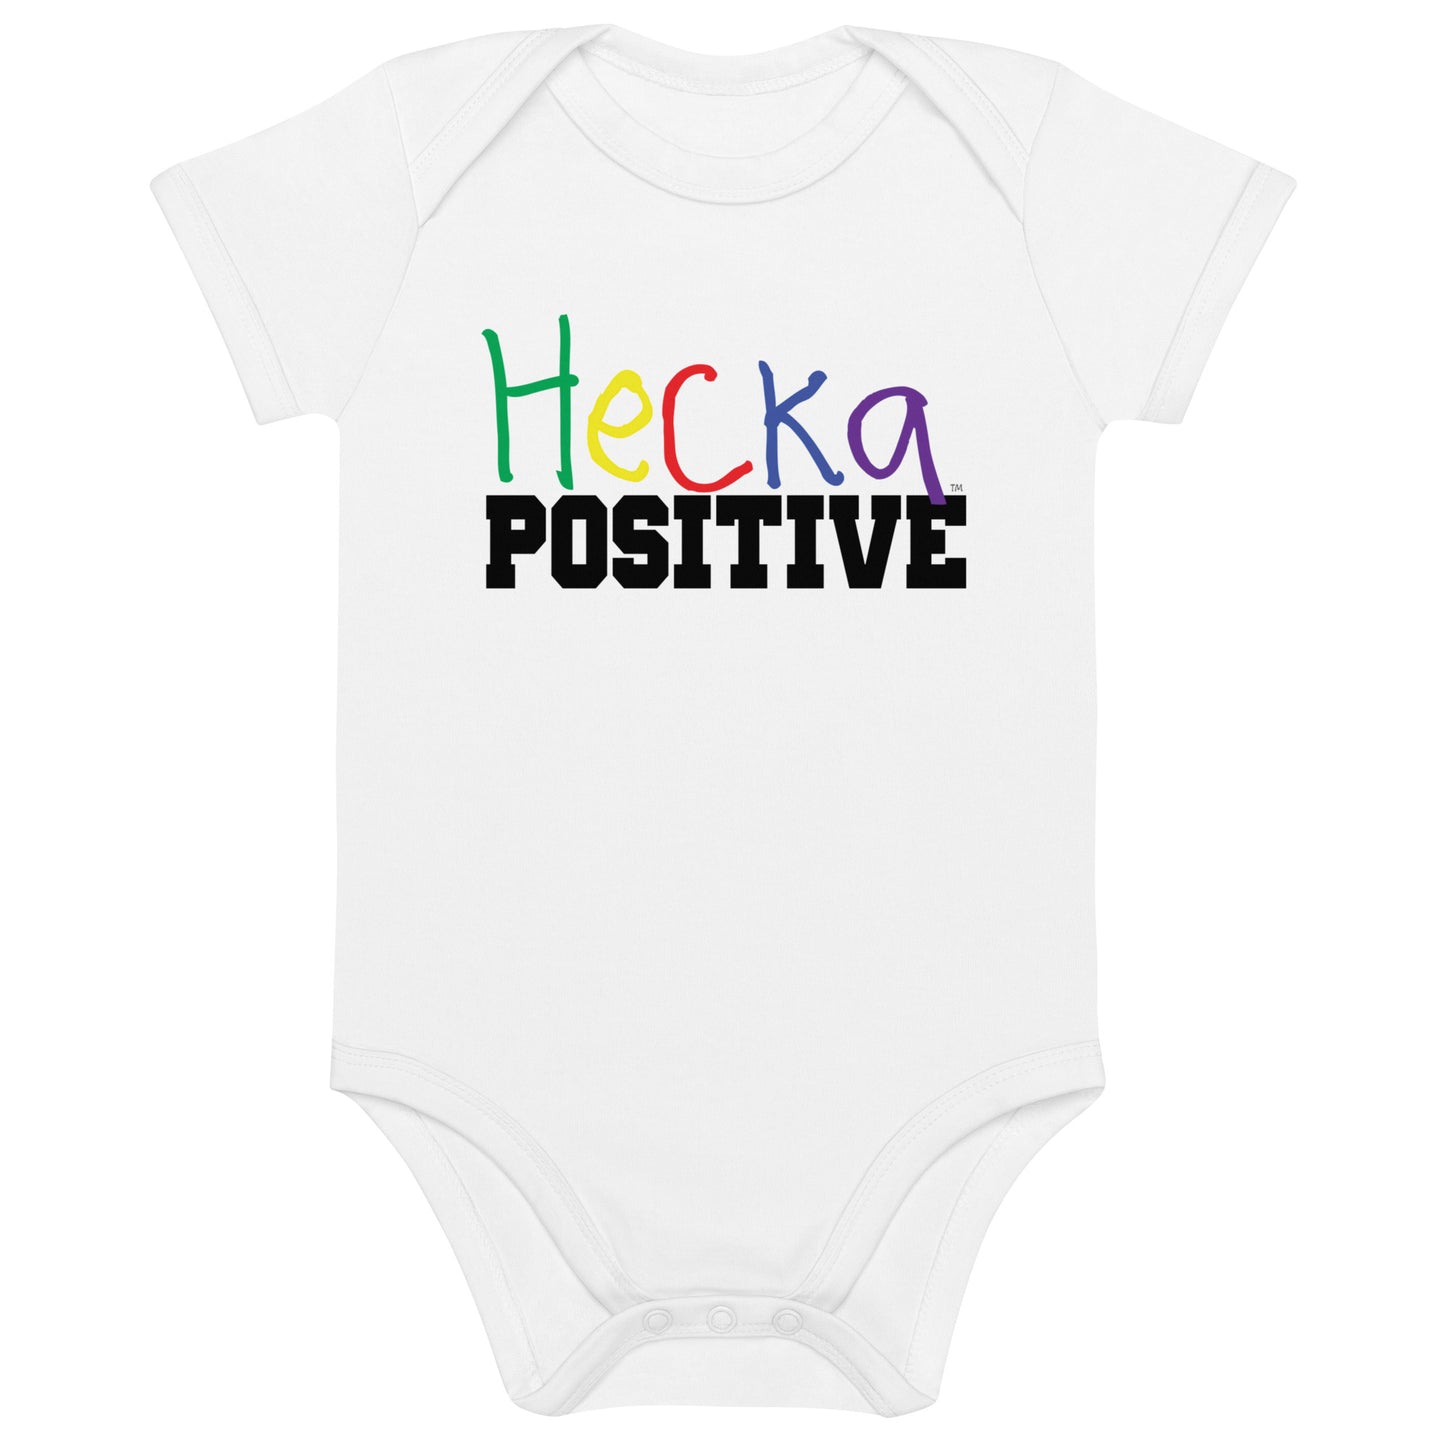 Organic cotton Hecka Positive baby bodysuit